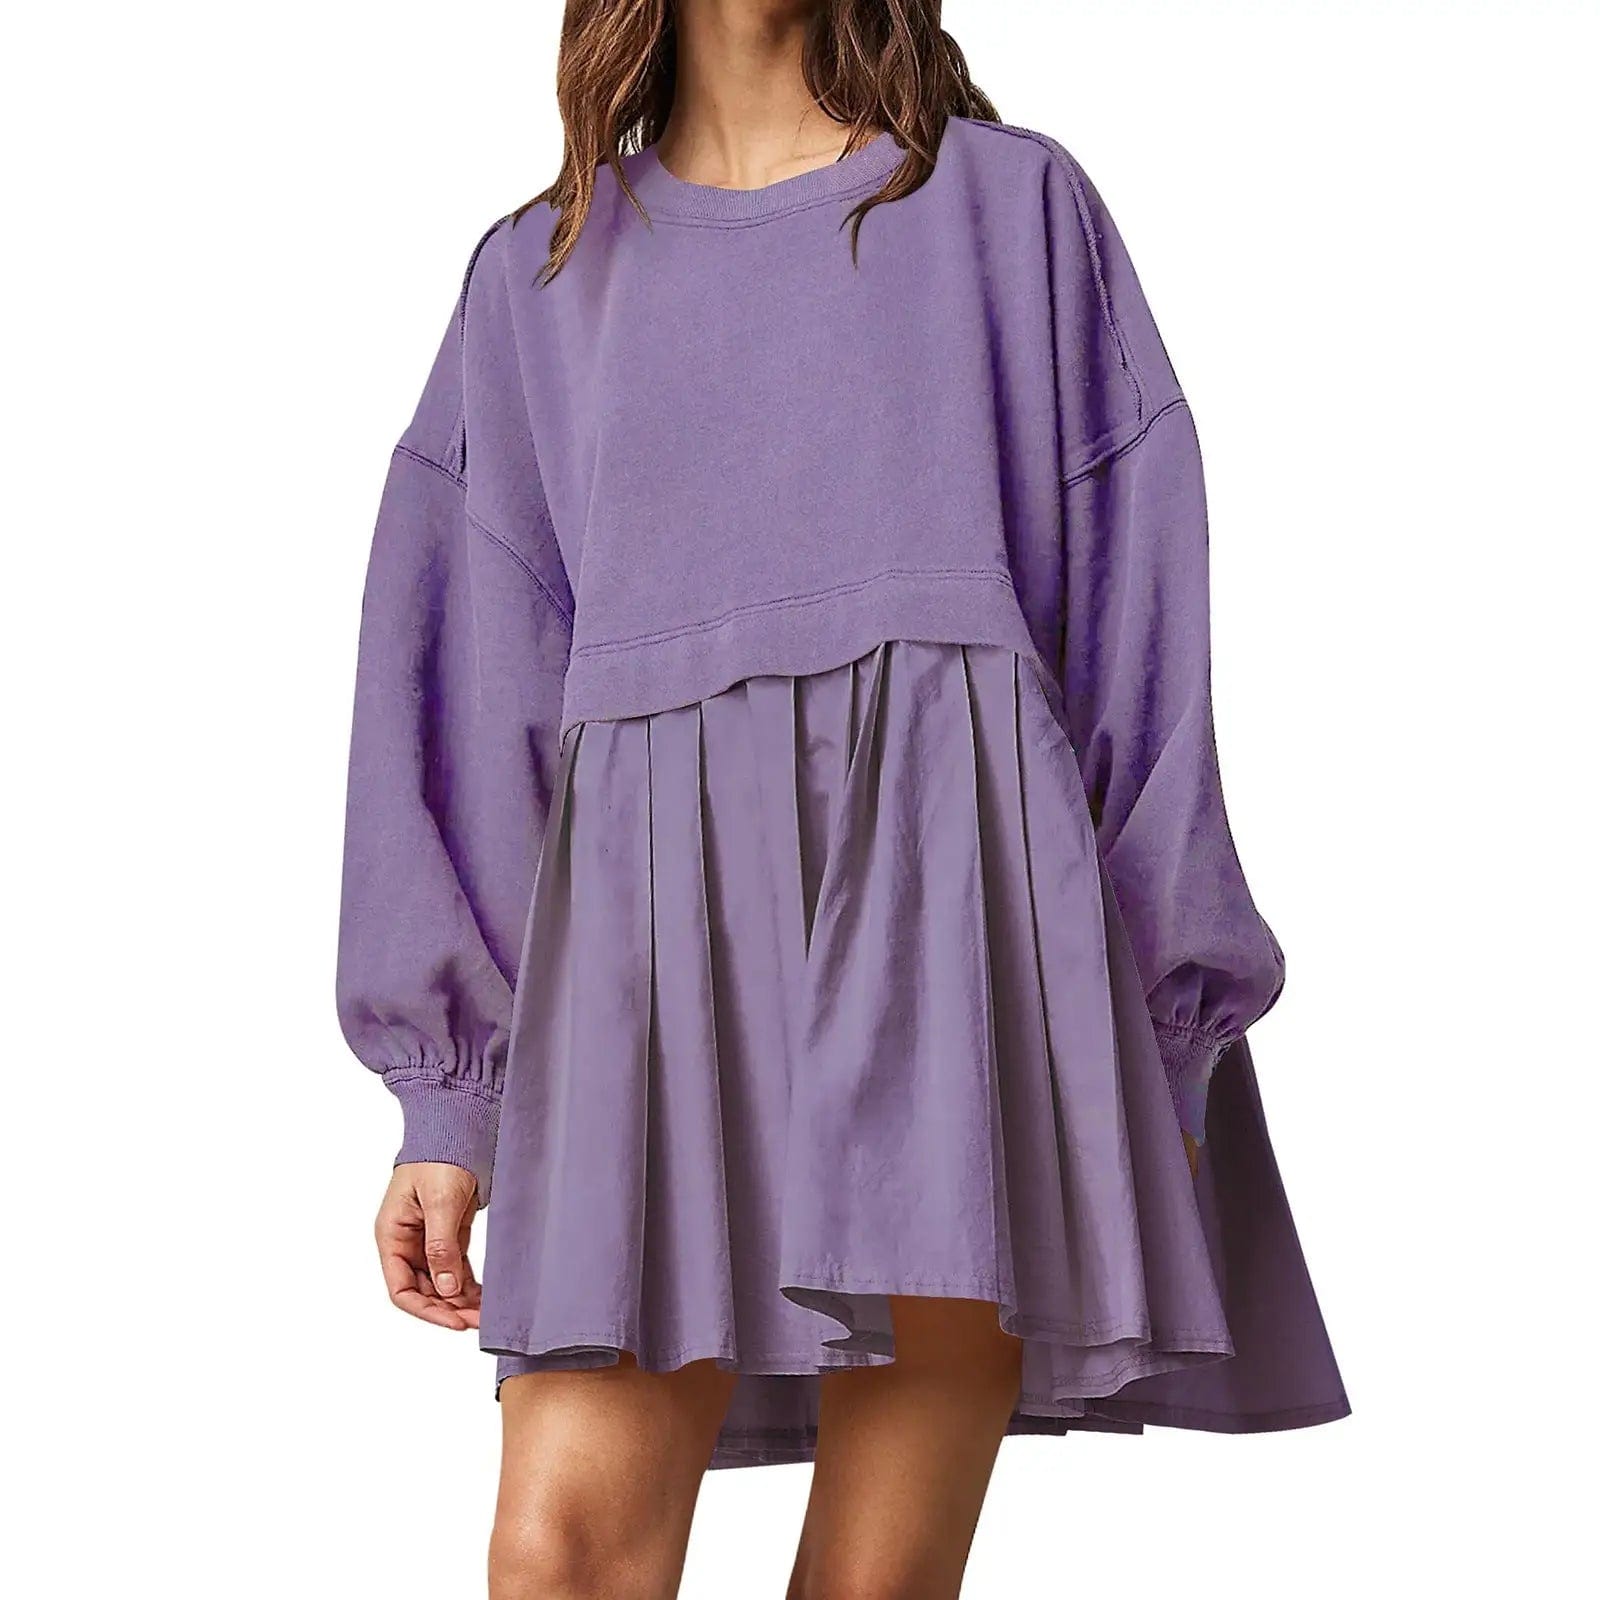 Cheky Purple / S Womens Sweatshirt Dress Loose Long Sleeve Crewneck Pullover Tops Relaxed Fit Sweatshirts Short Dress